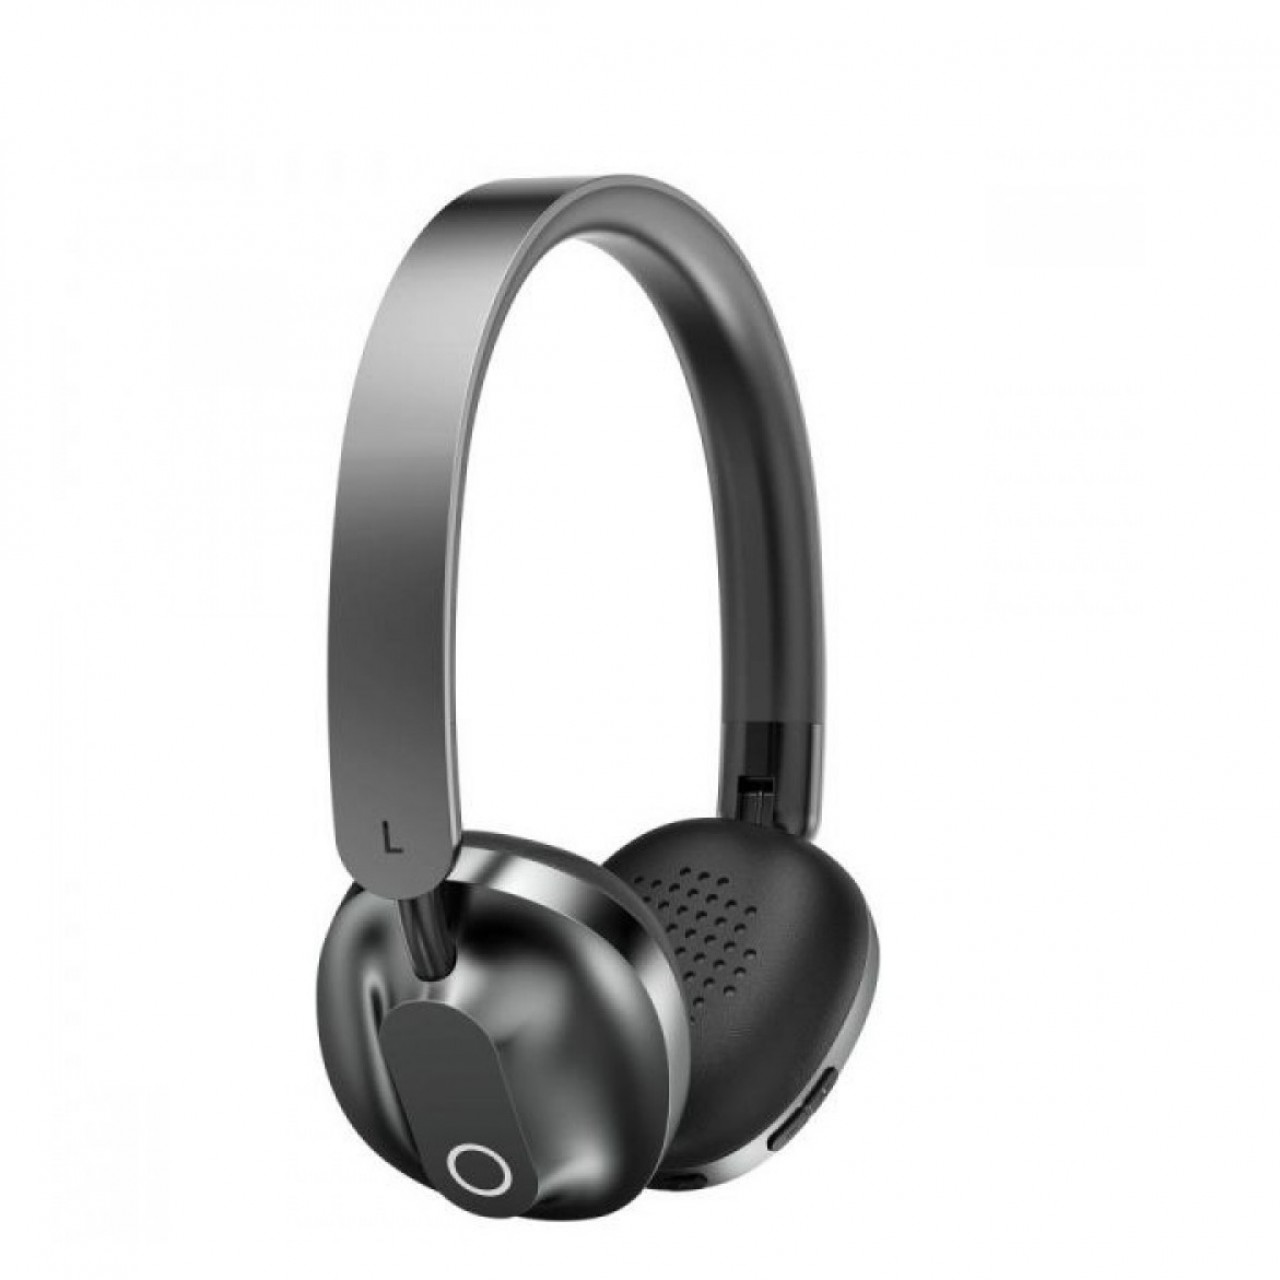 Baseus Encok D01 Wireless Bluetooh Headphone - 4.2 Bluetooth Technology